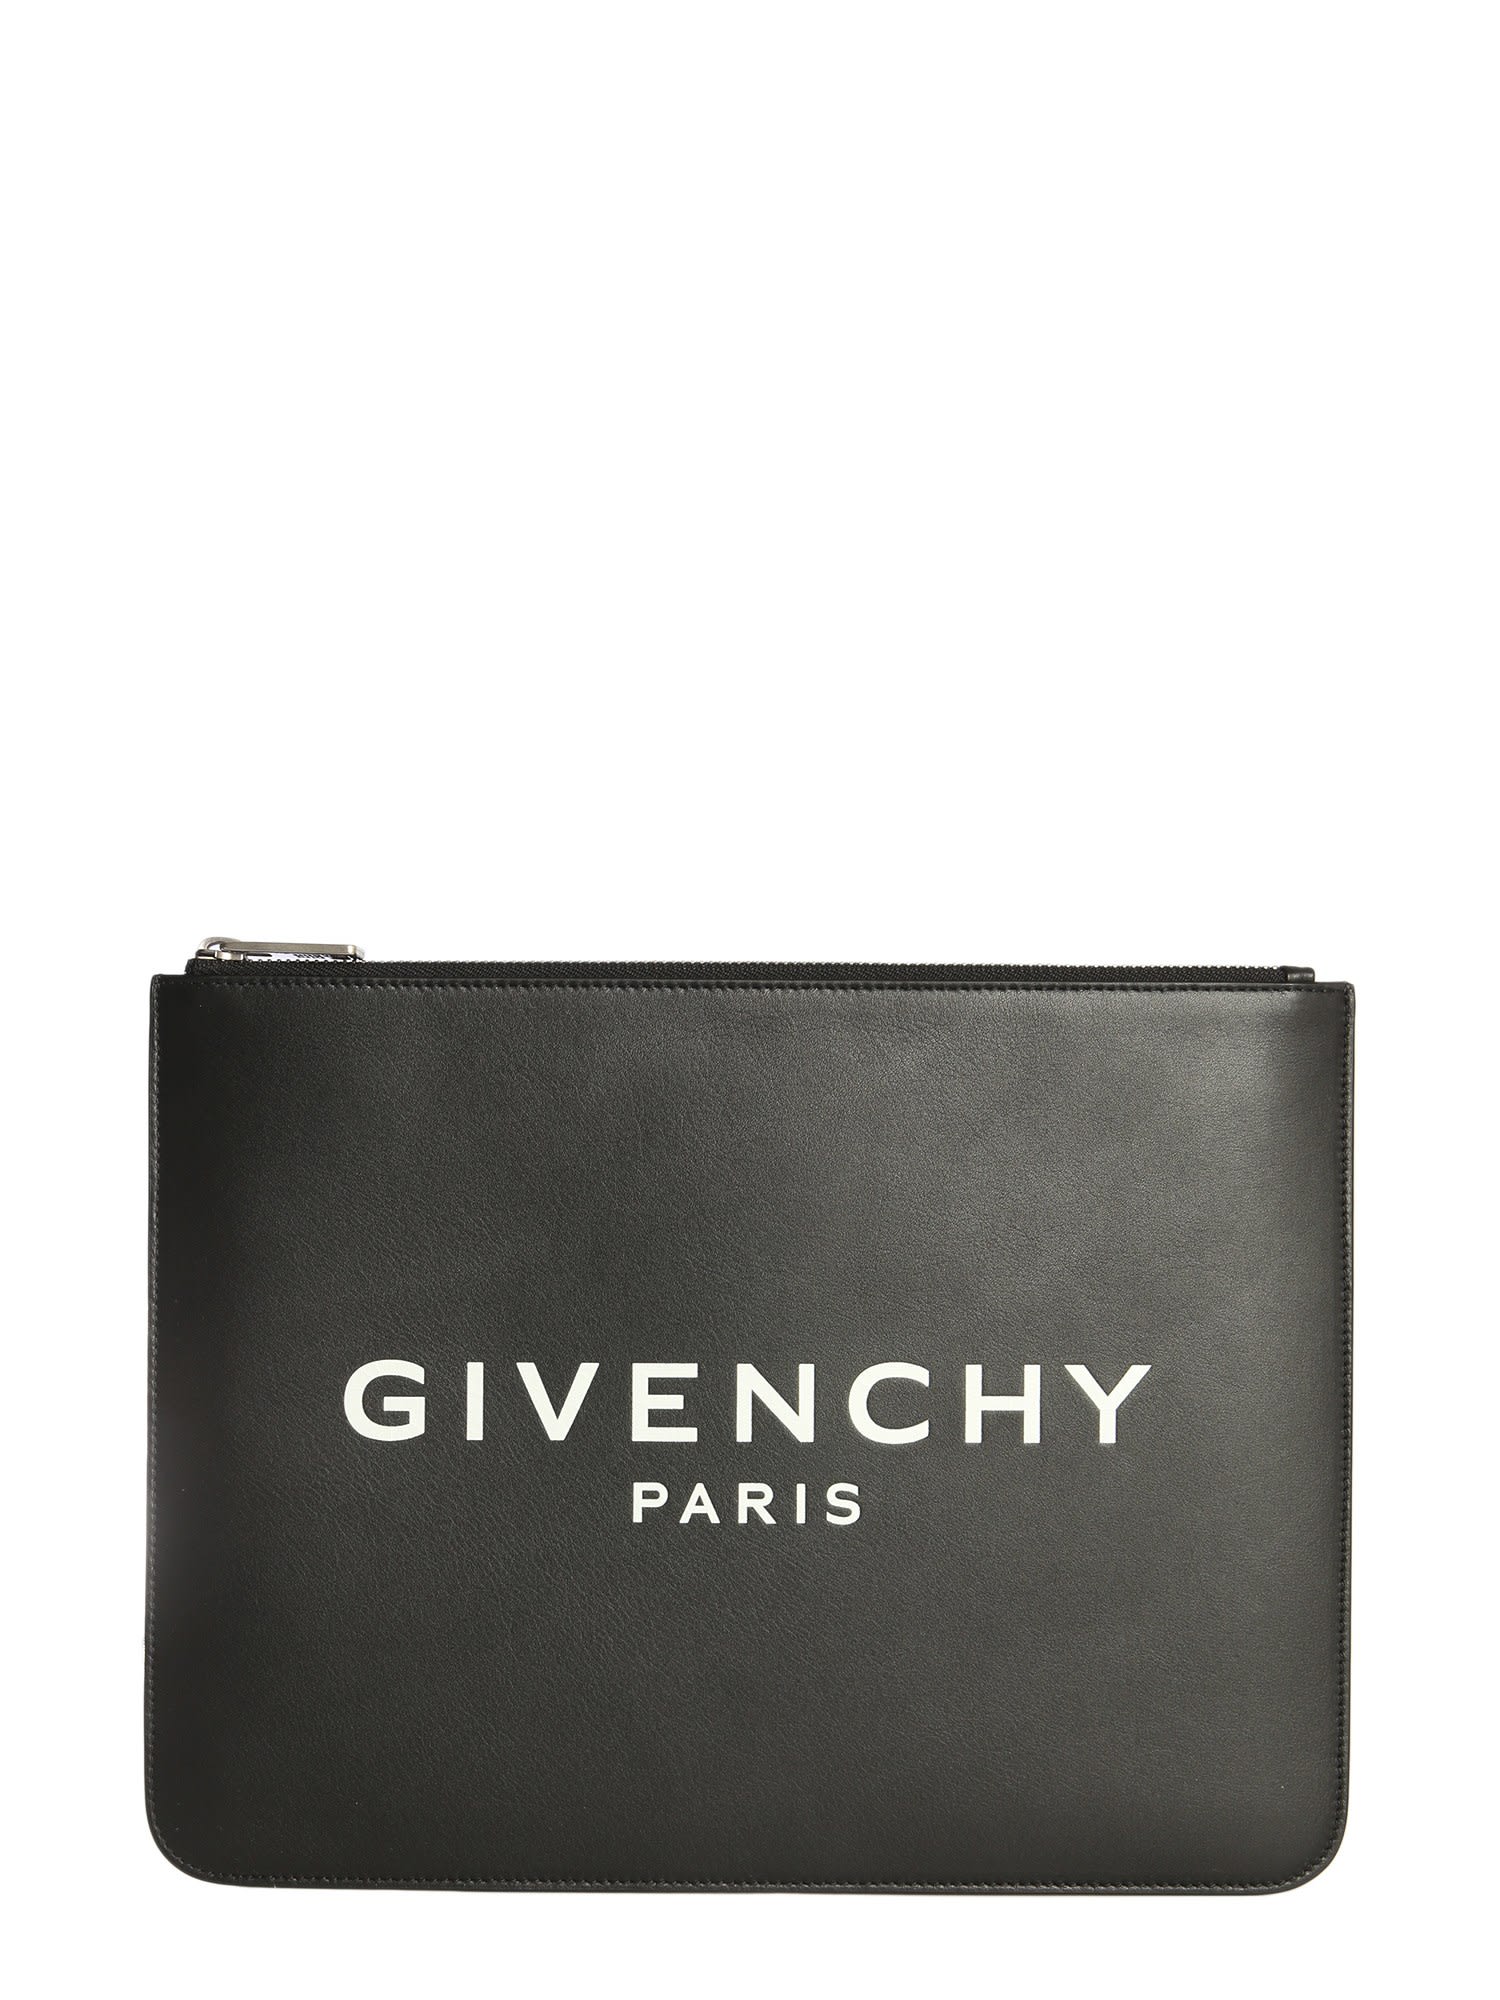 Givenchy Logo Printed Clutch